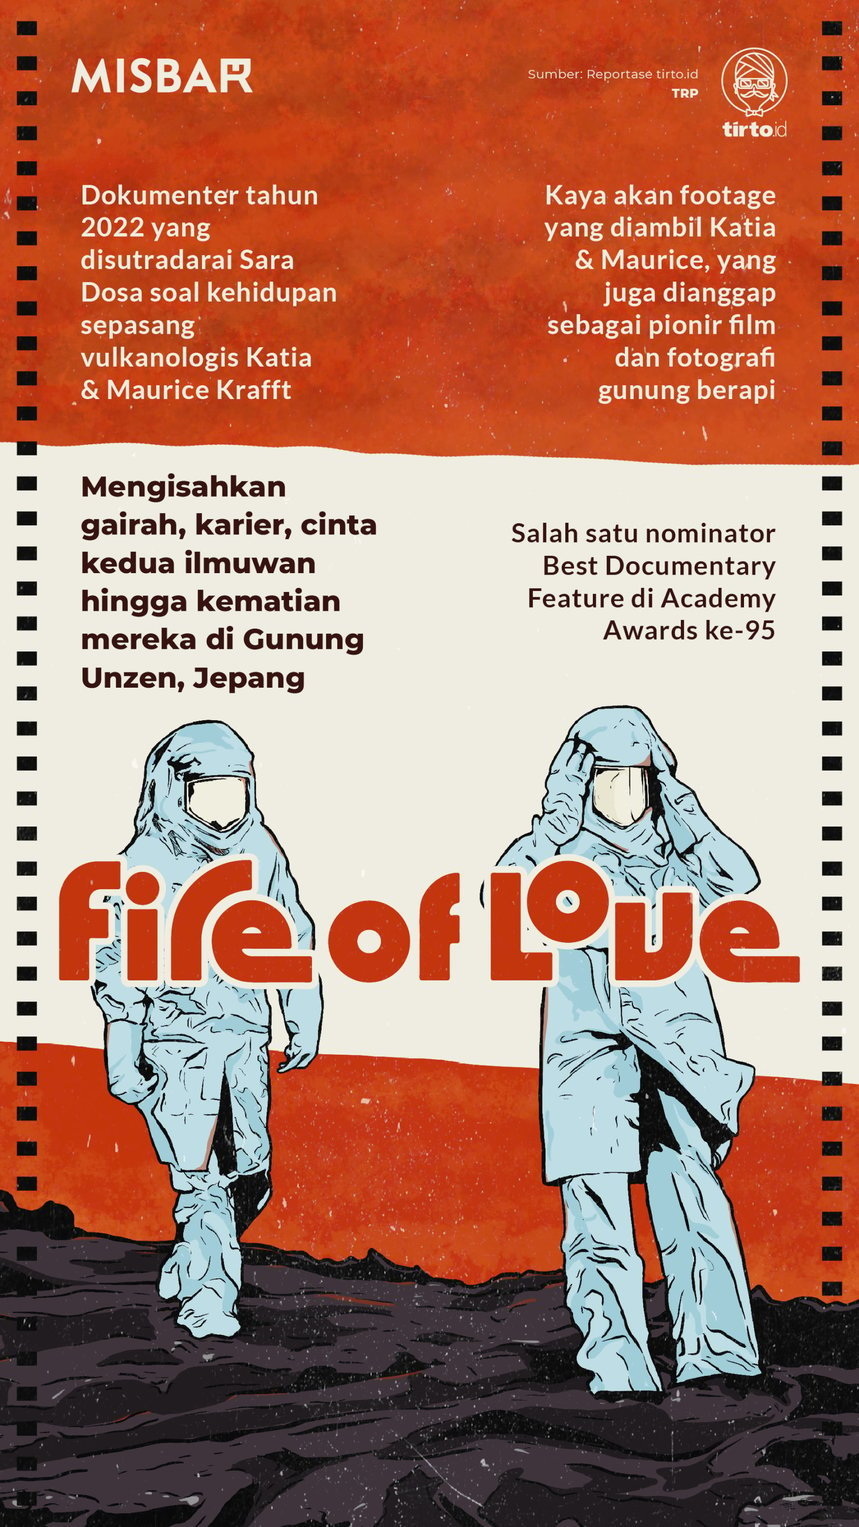 Infografik Misbar Fire of Love